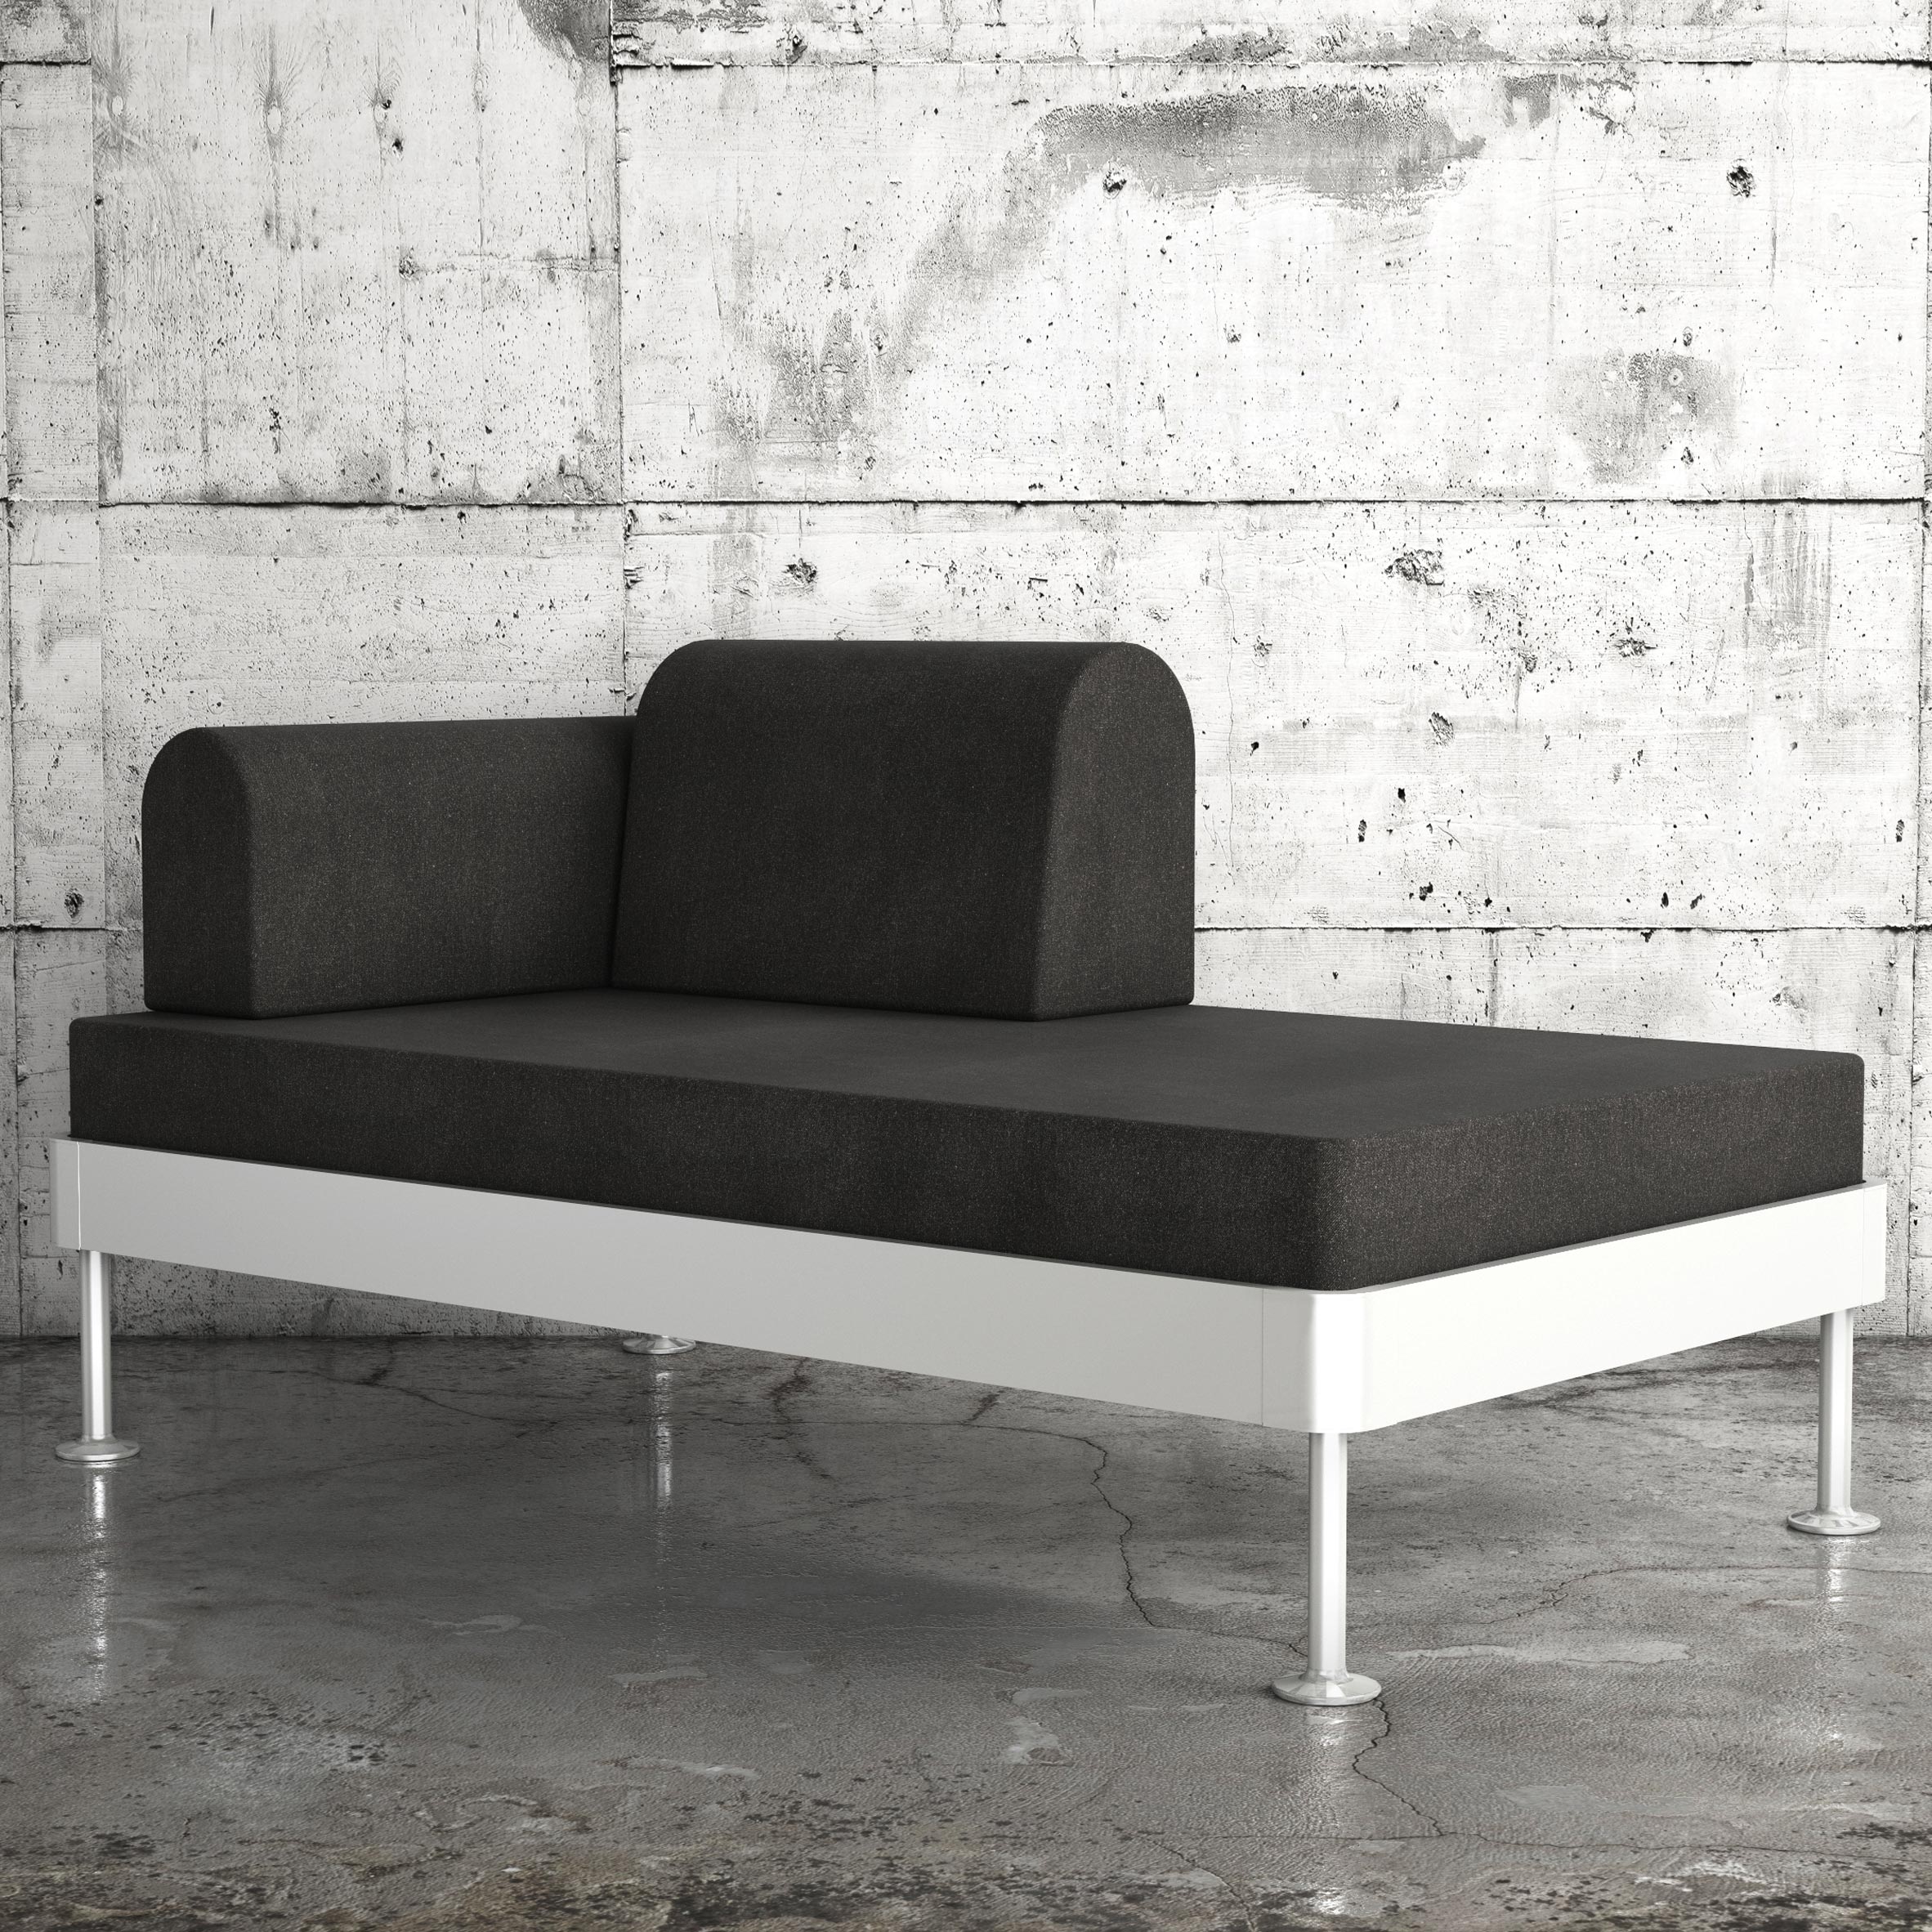 bue Champagne katolsk IKEA reveals Tom Dixon's Delaktig modular bed and sofa